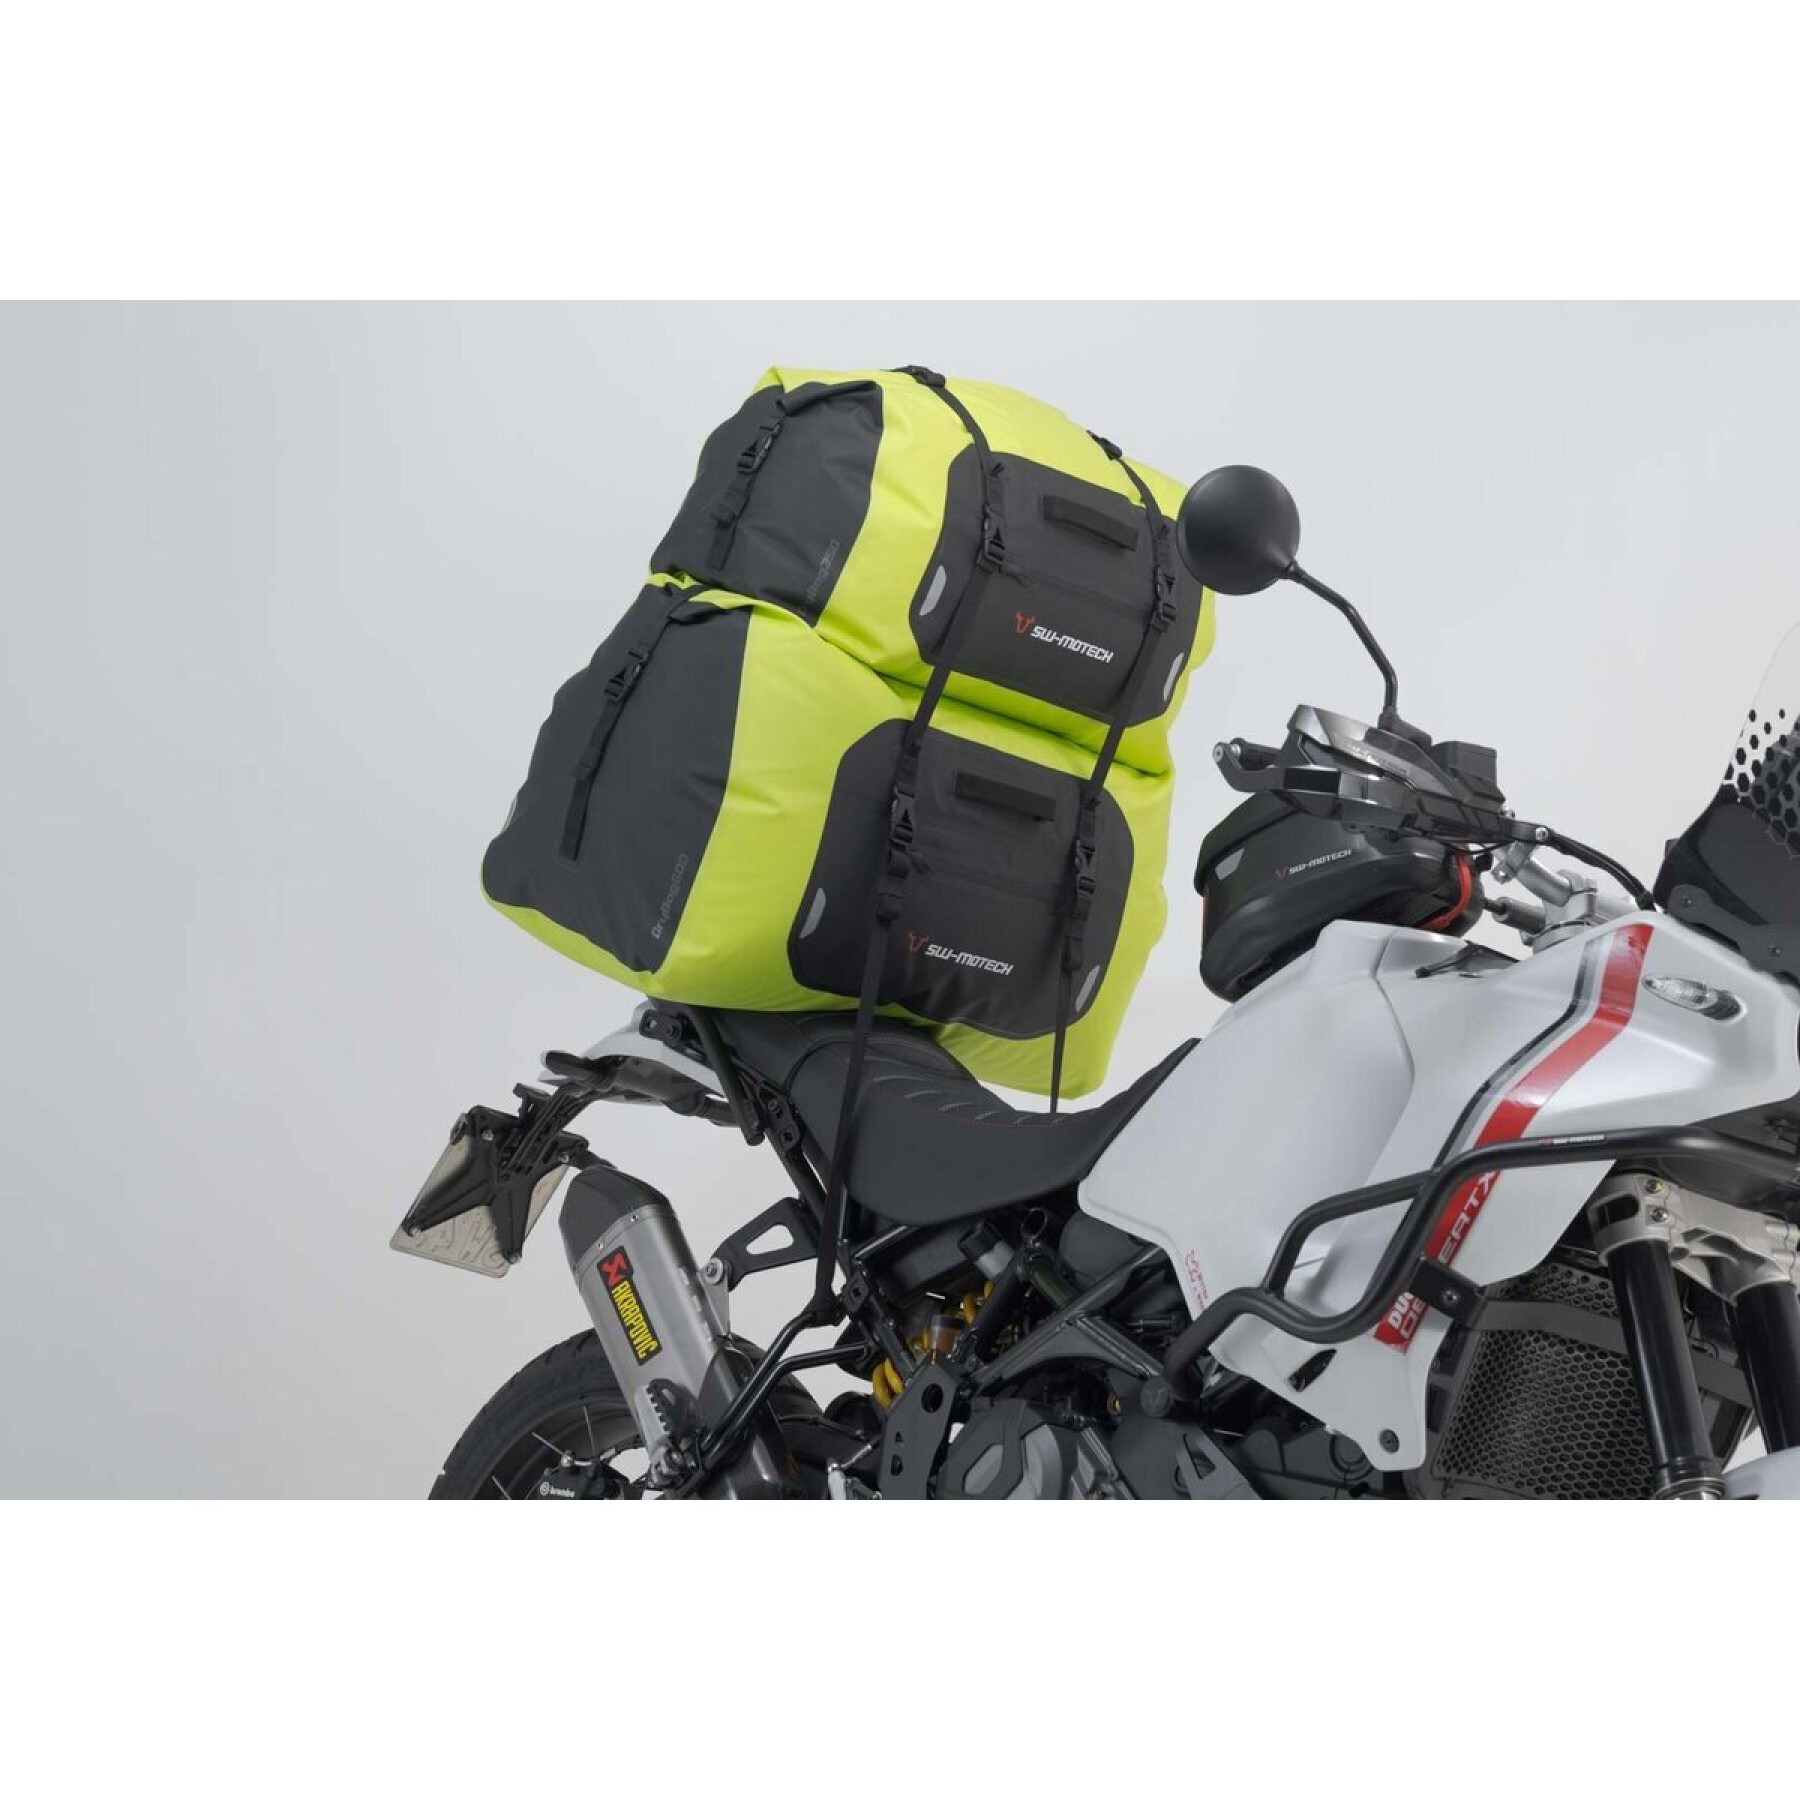 Motorrad-Satteltasche SW-Motech Drybag 600